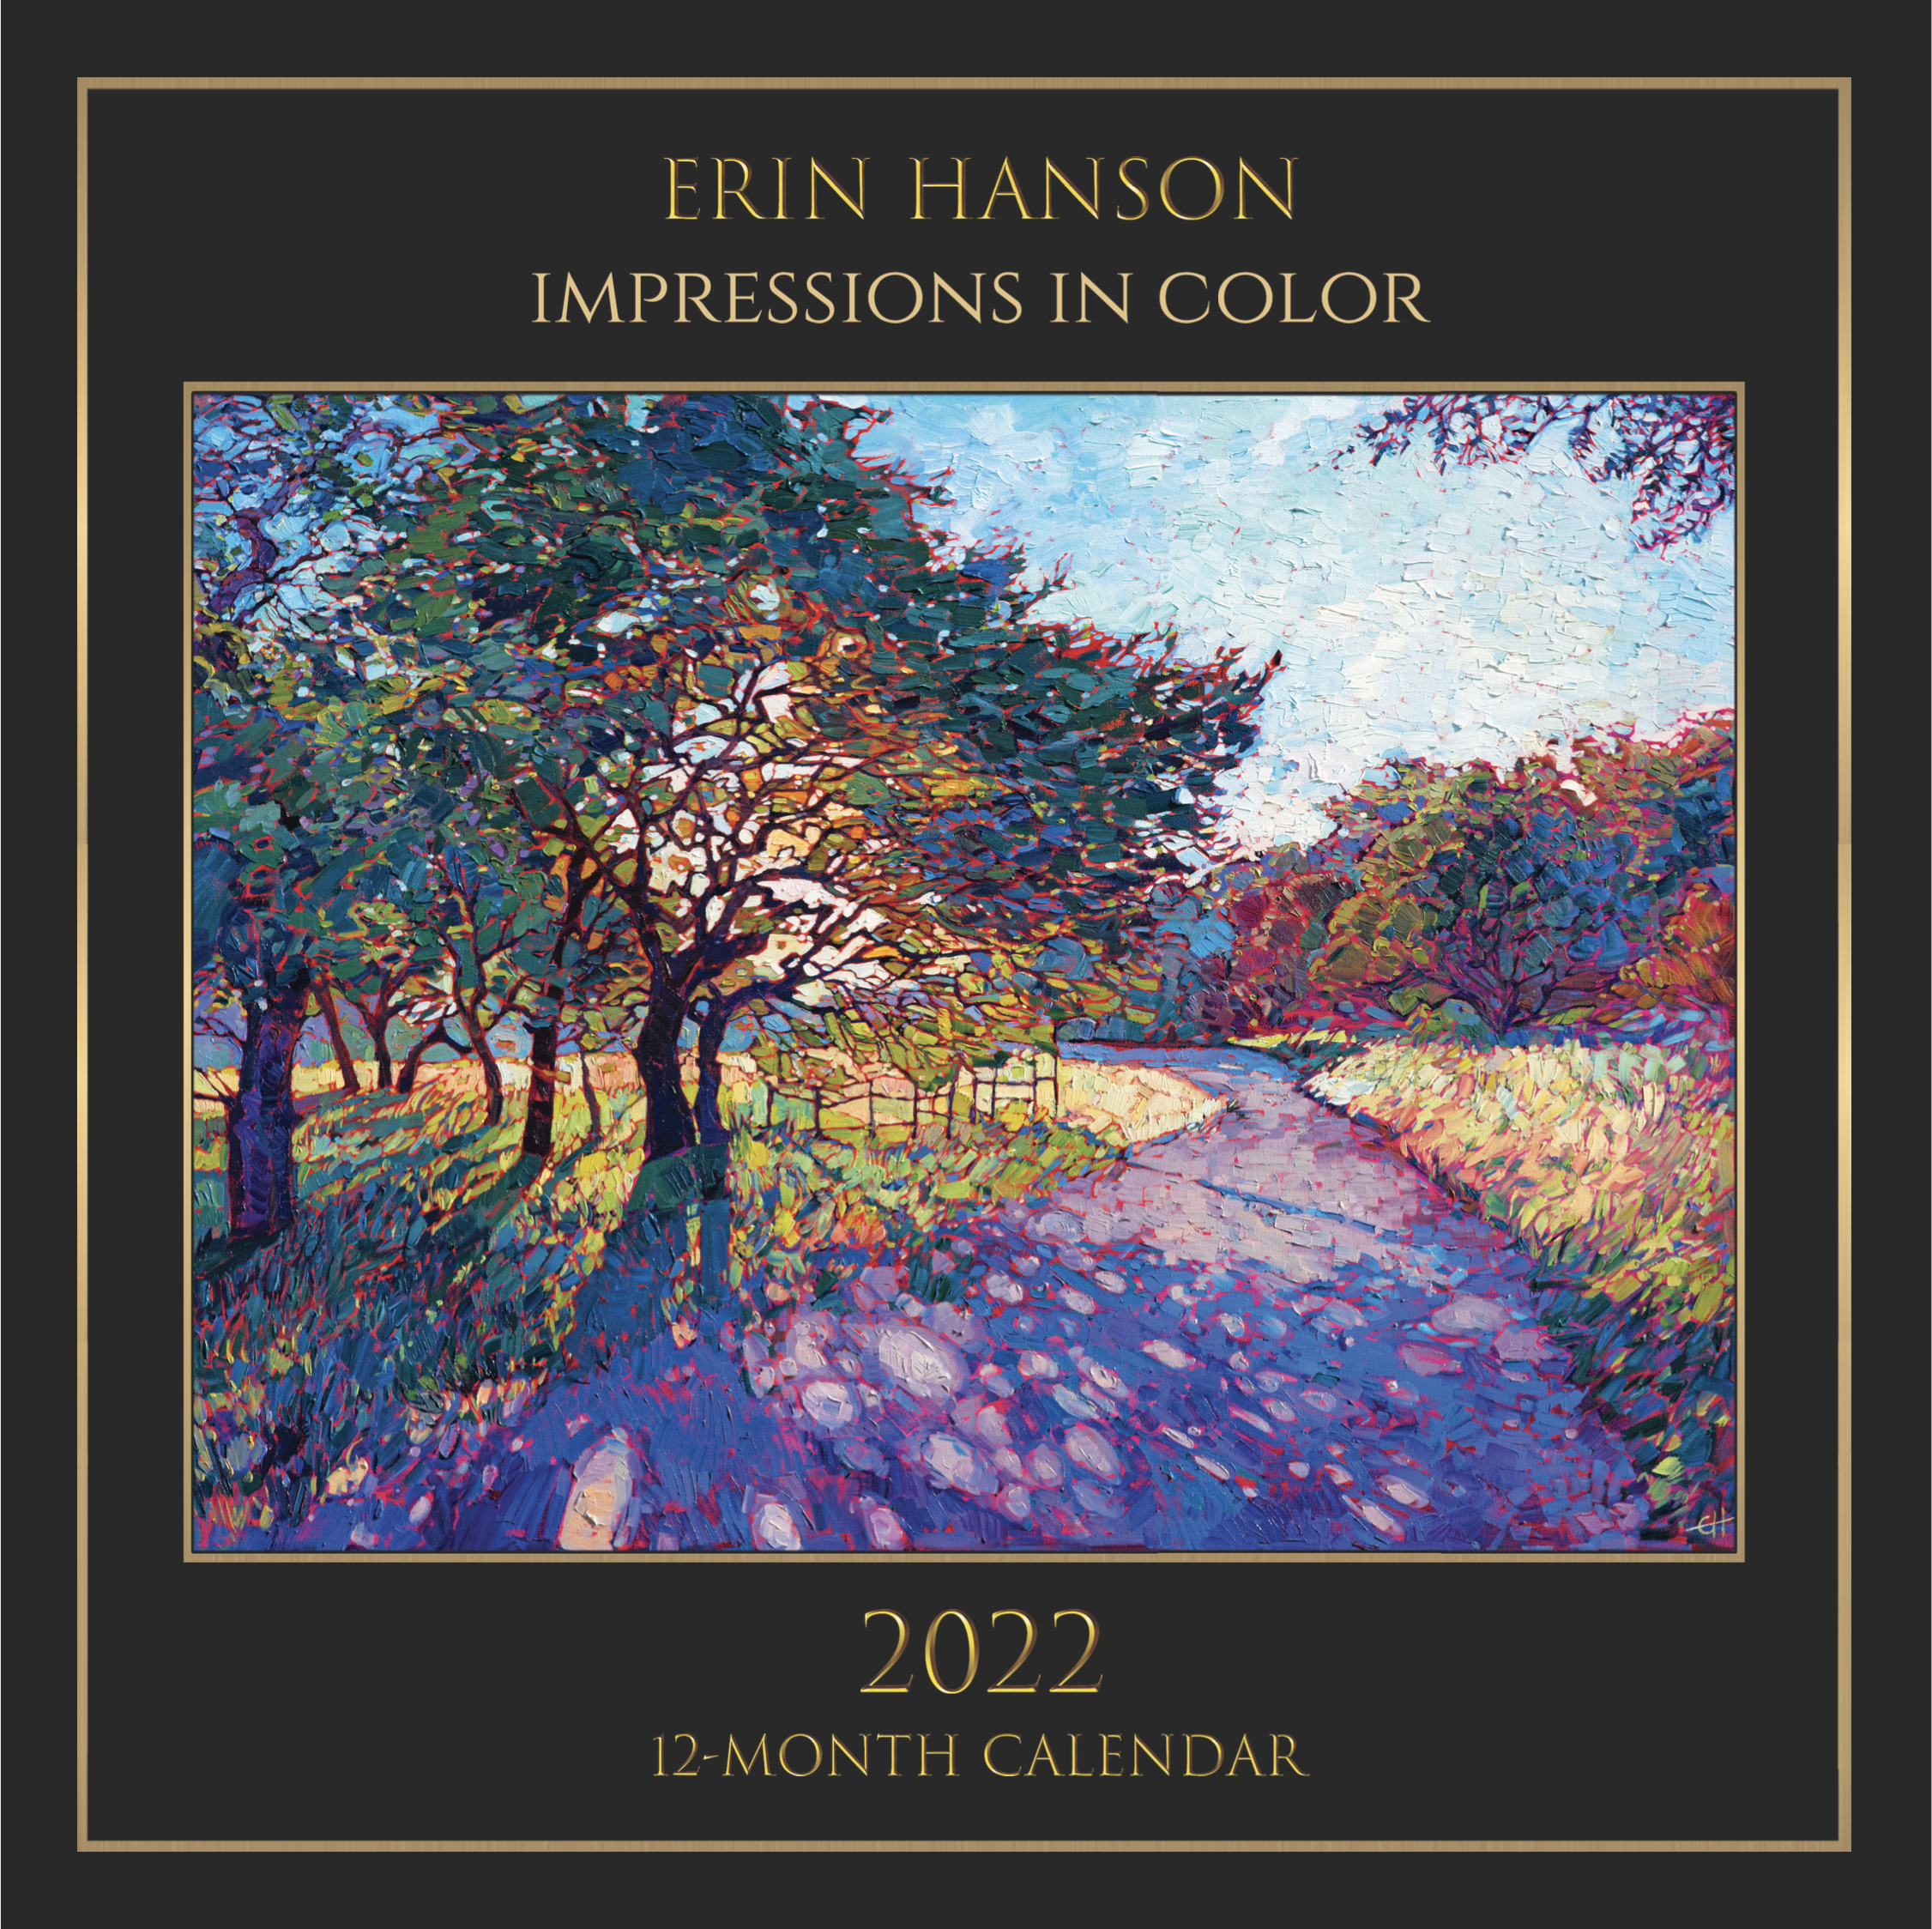 Erin Hanson: Impressions in Color - 2022 Wall Calendar